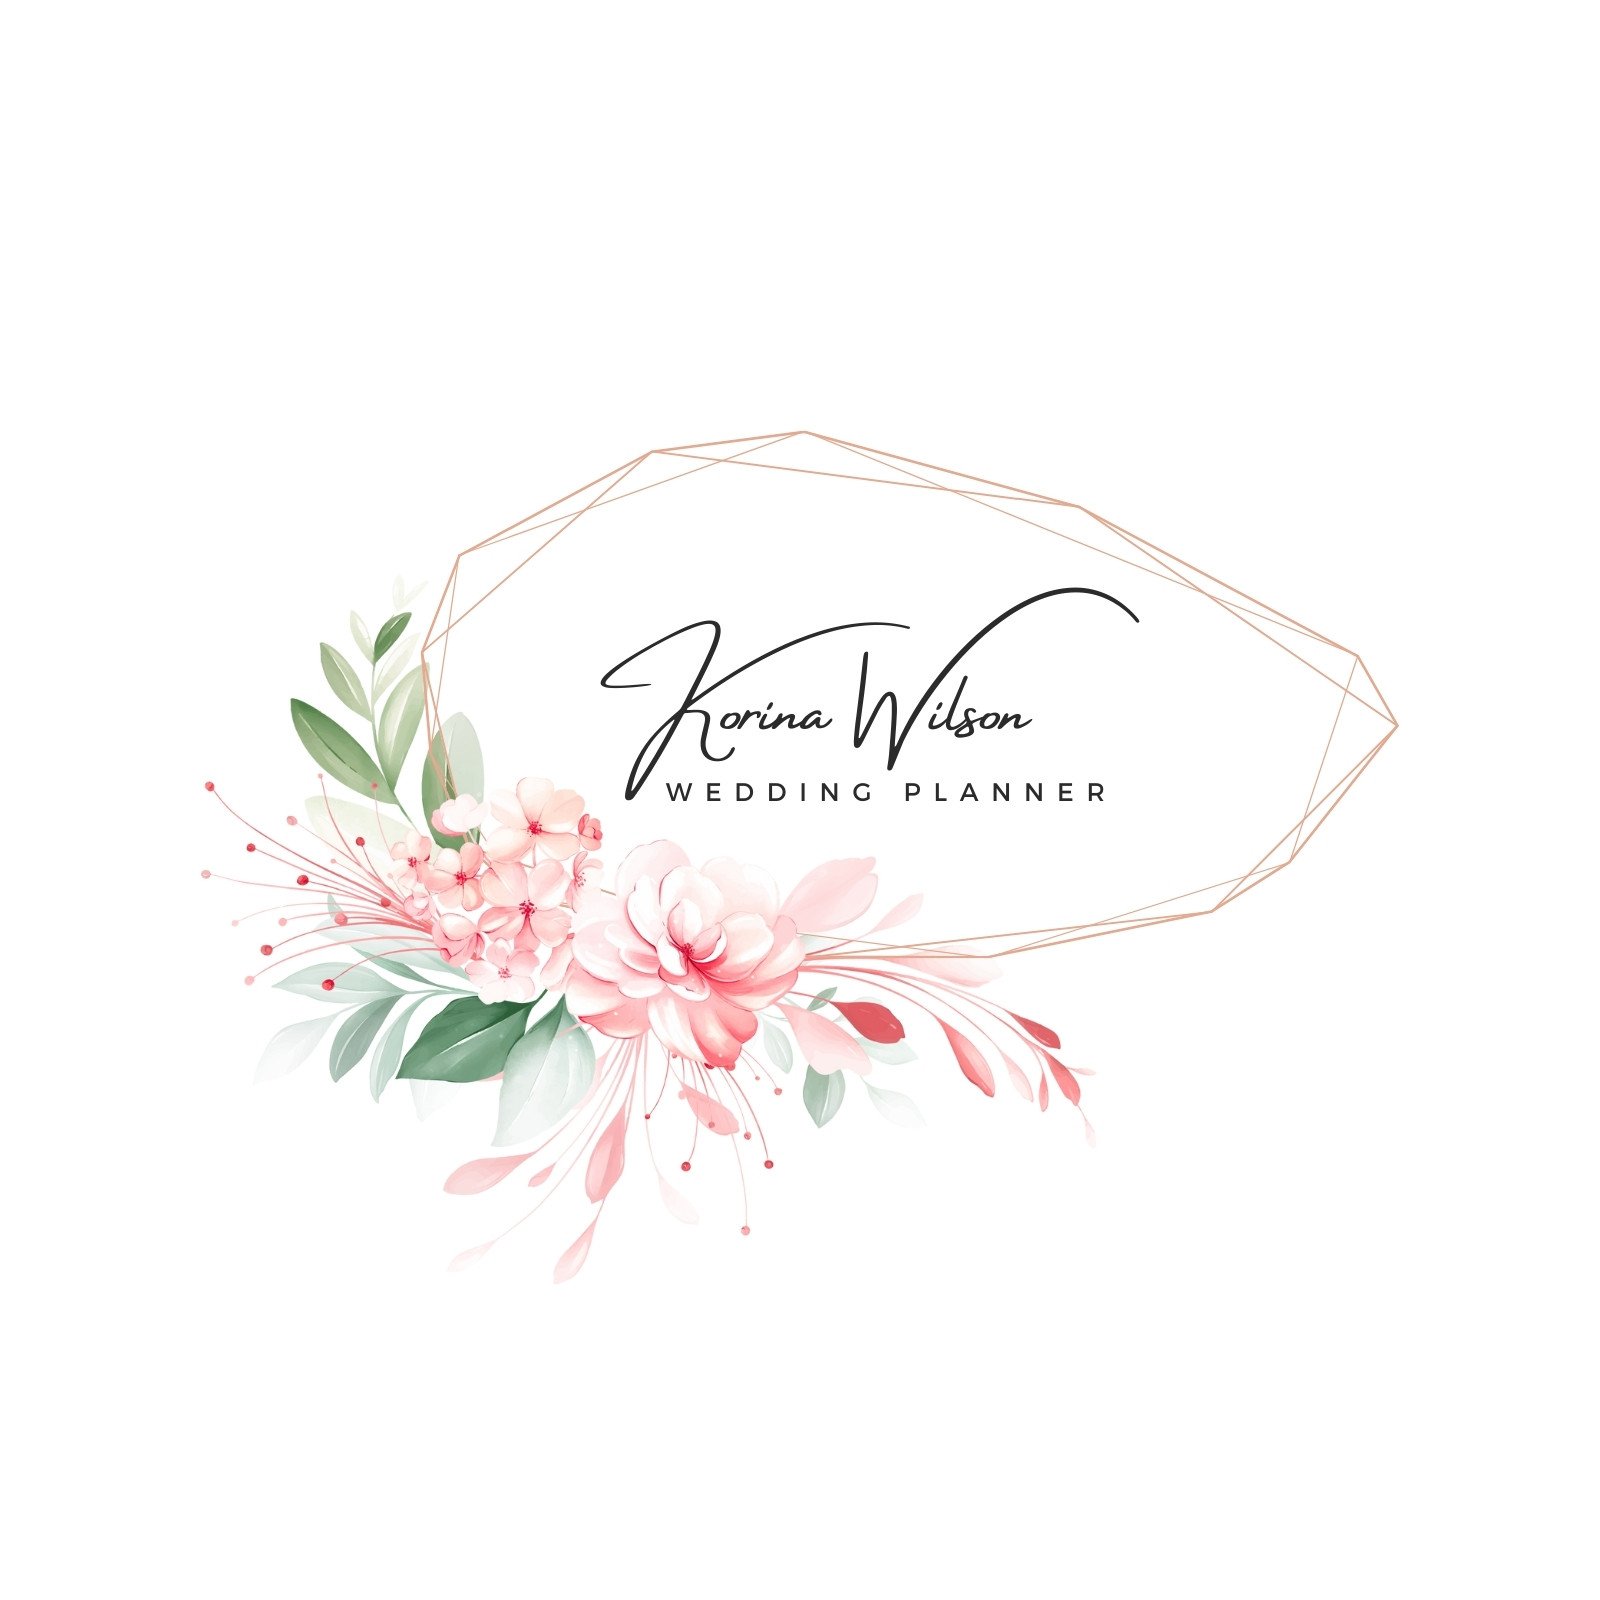 https://marketplace.canva.com/EAFVXpC52UM/1/0/1600w/canva-watercolor-floral-frame-wedding-planner-logo-qiwodPwpL-w.jpg